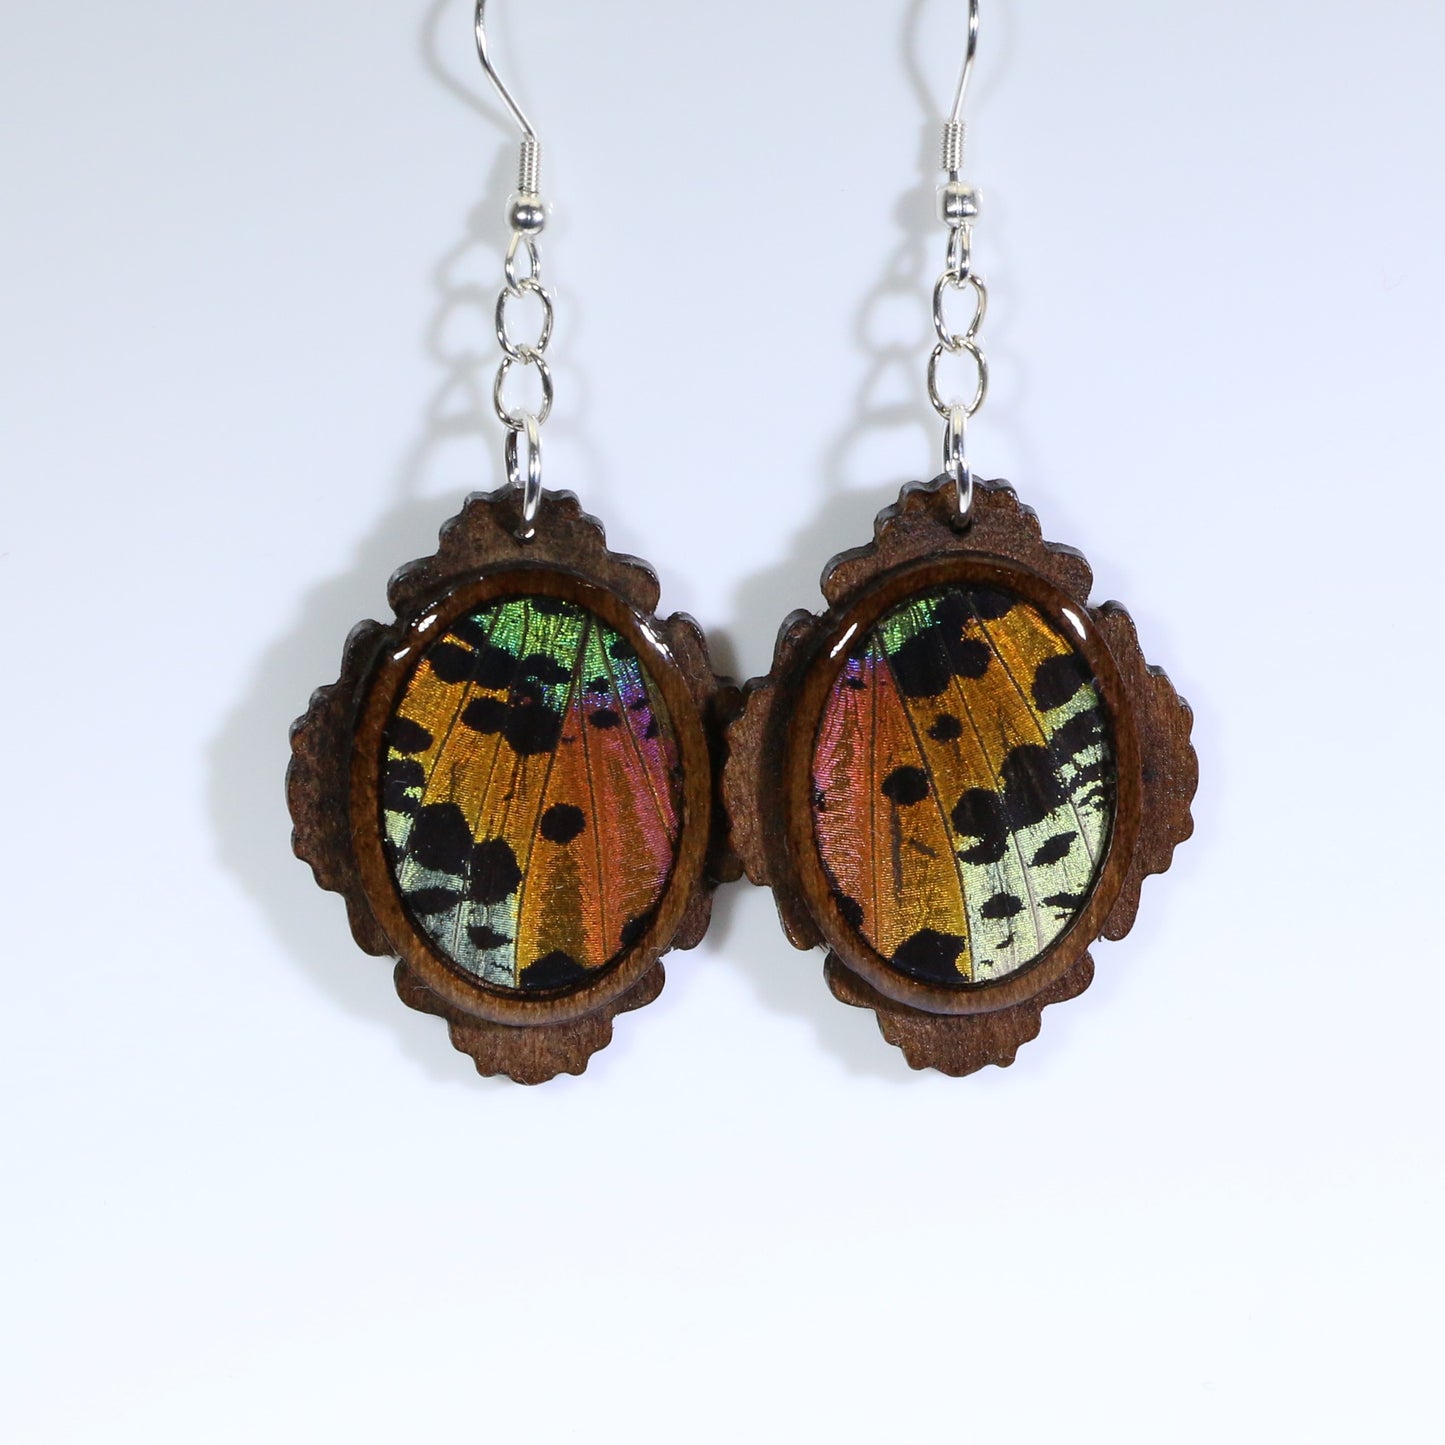 51752 - Real Butterfly Wing Jewelry - Earrings - Medium - Dark Wood - Oval - Filigree - Sunset Moth - Orange